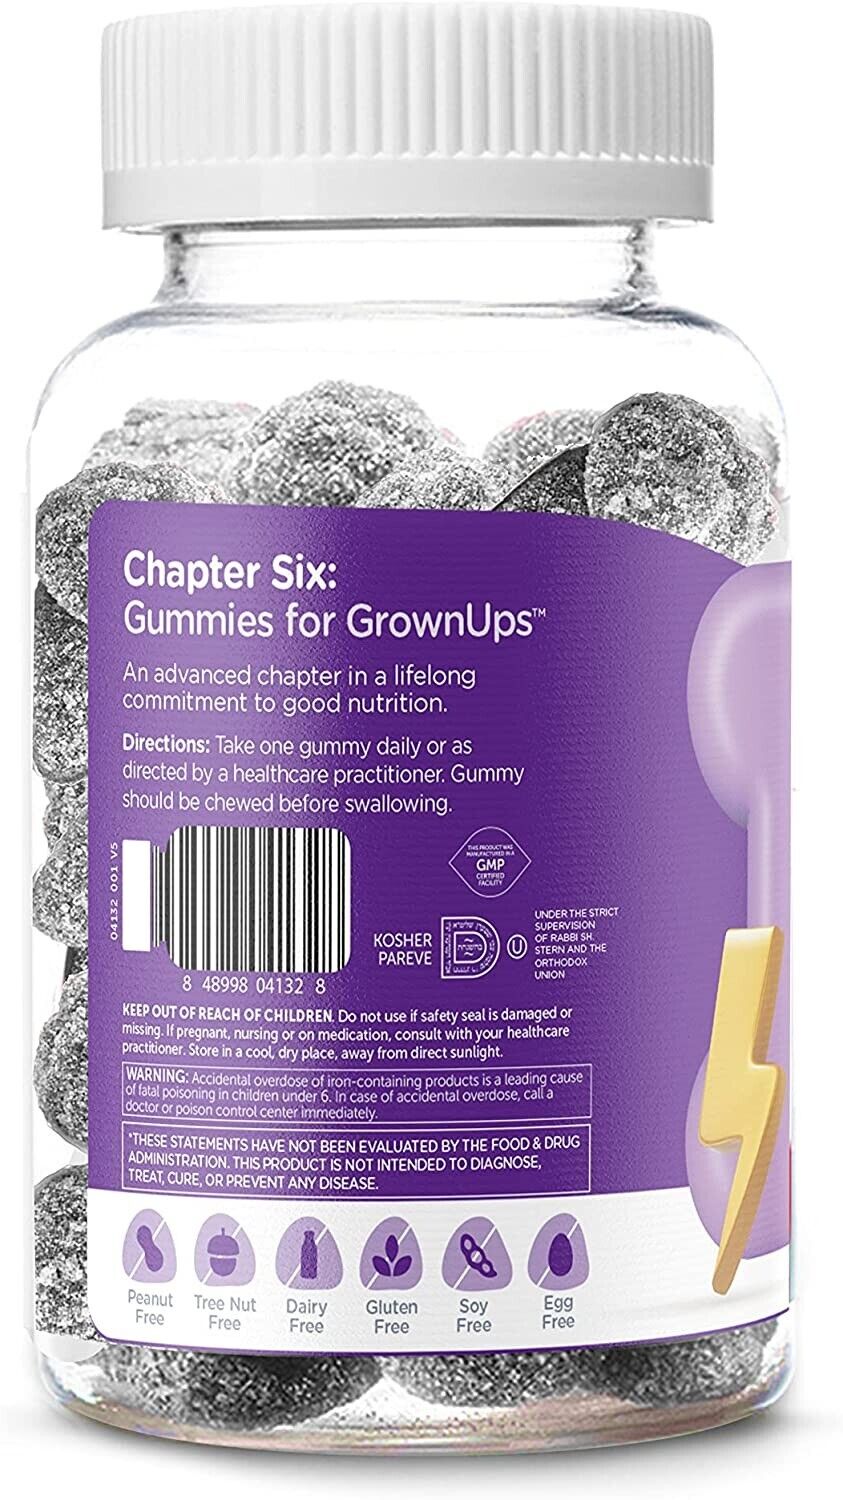 Iron Gummies, Supplement Vitamin C, Adults 10mg, Kosher, 60 Flavored Gummies NEW